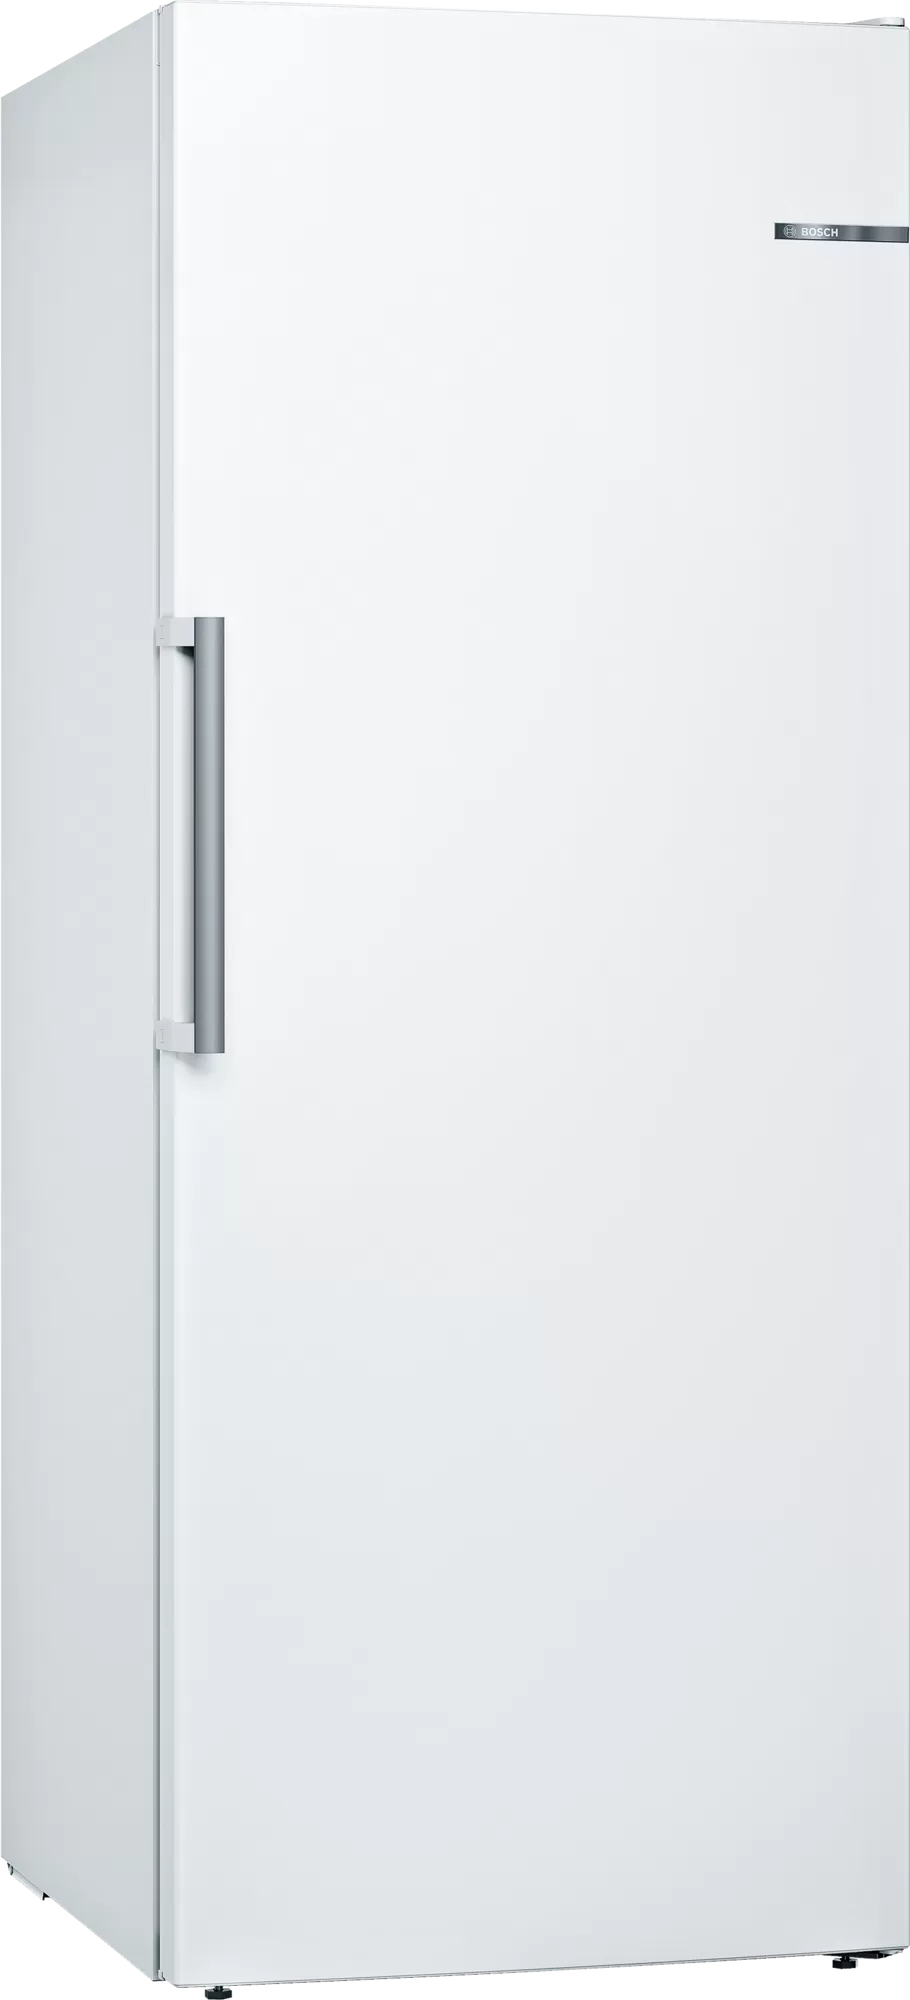 Image of Bosch Serie 6 GSN54AWDV congelatore Congelatore verticale Libera installazione 328 L D Bianco